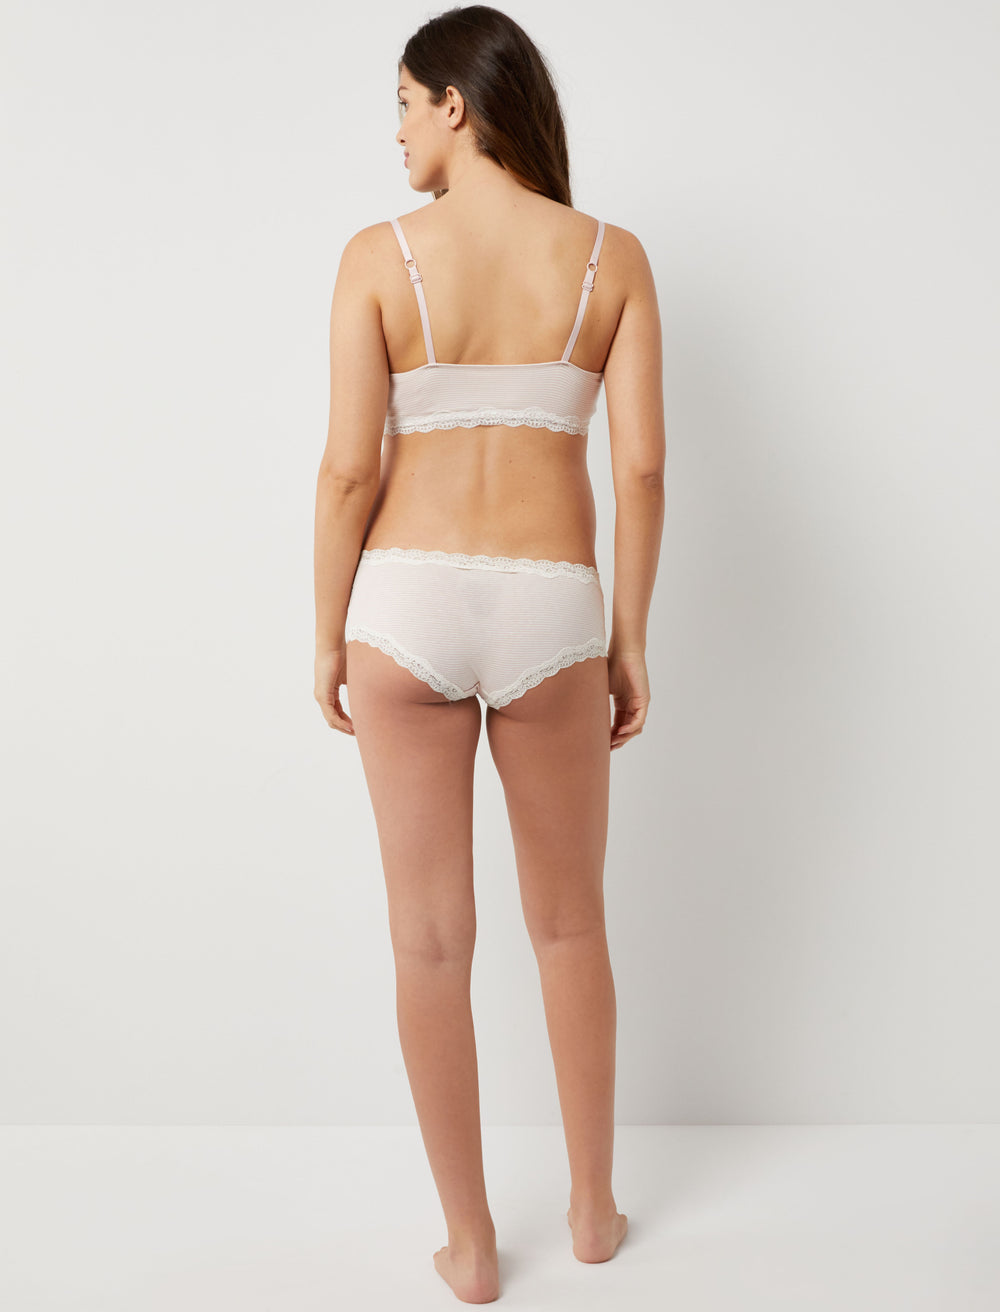 Queen Bee - Katie Over Bump Maternity Underwear Shorts in White